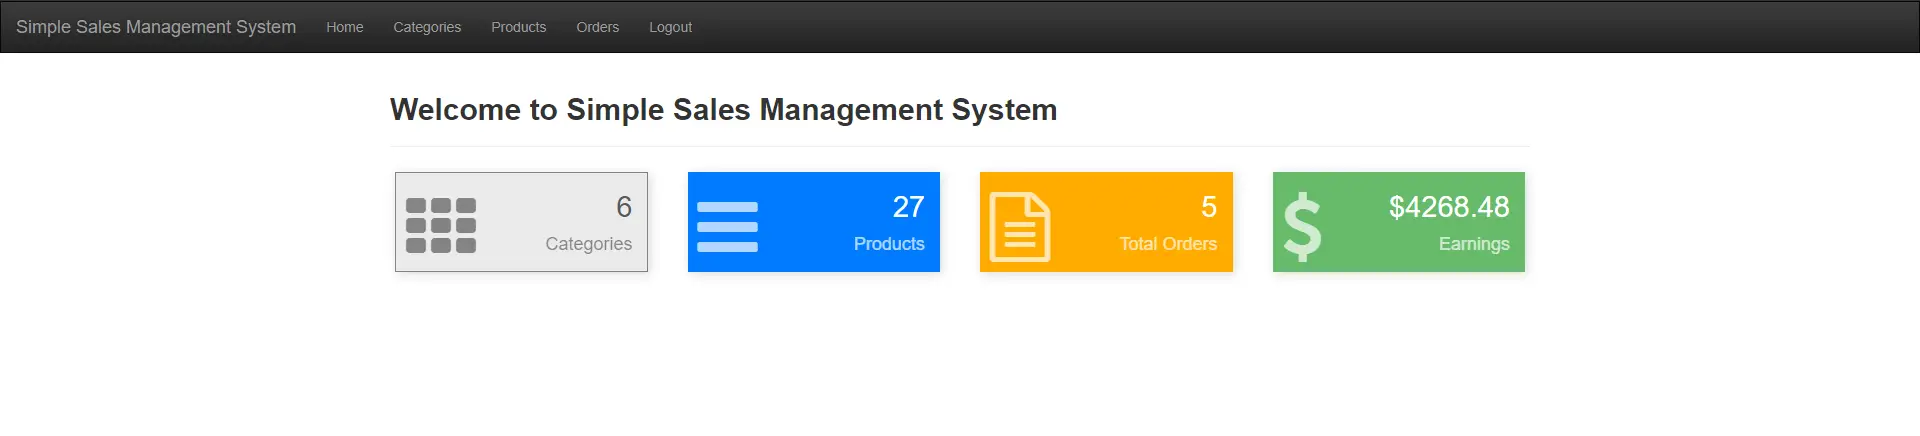 Simple Sales Management System